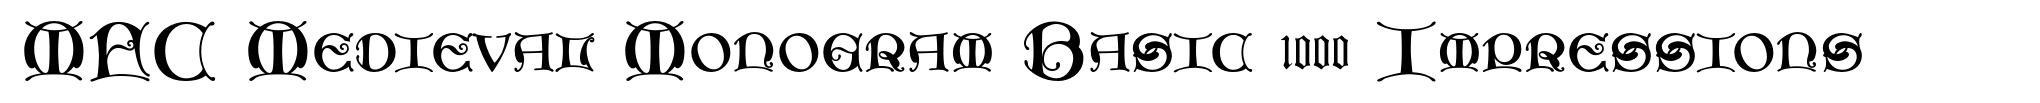 MFC Medieval Monogram Basic 1000 Impressions image